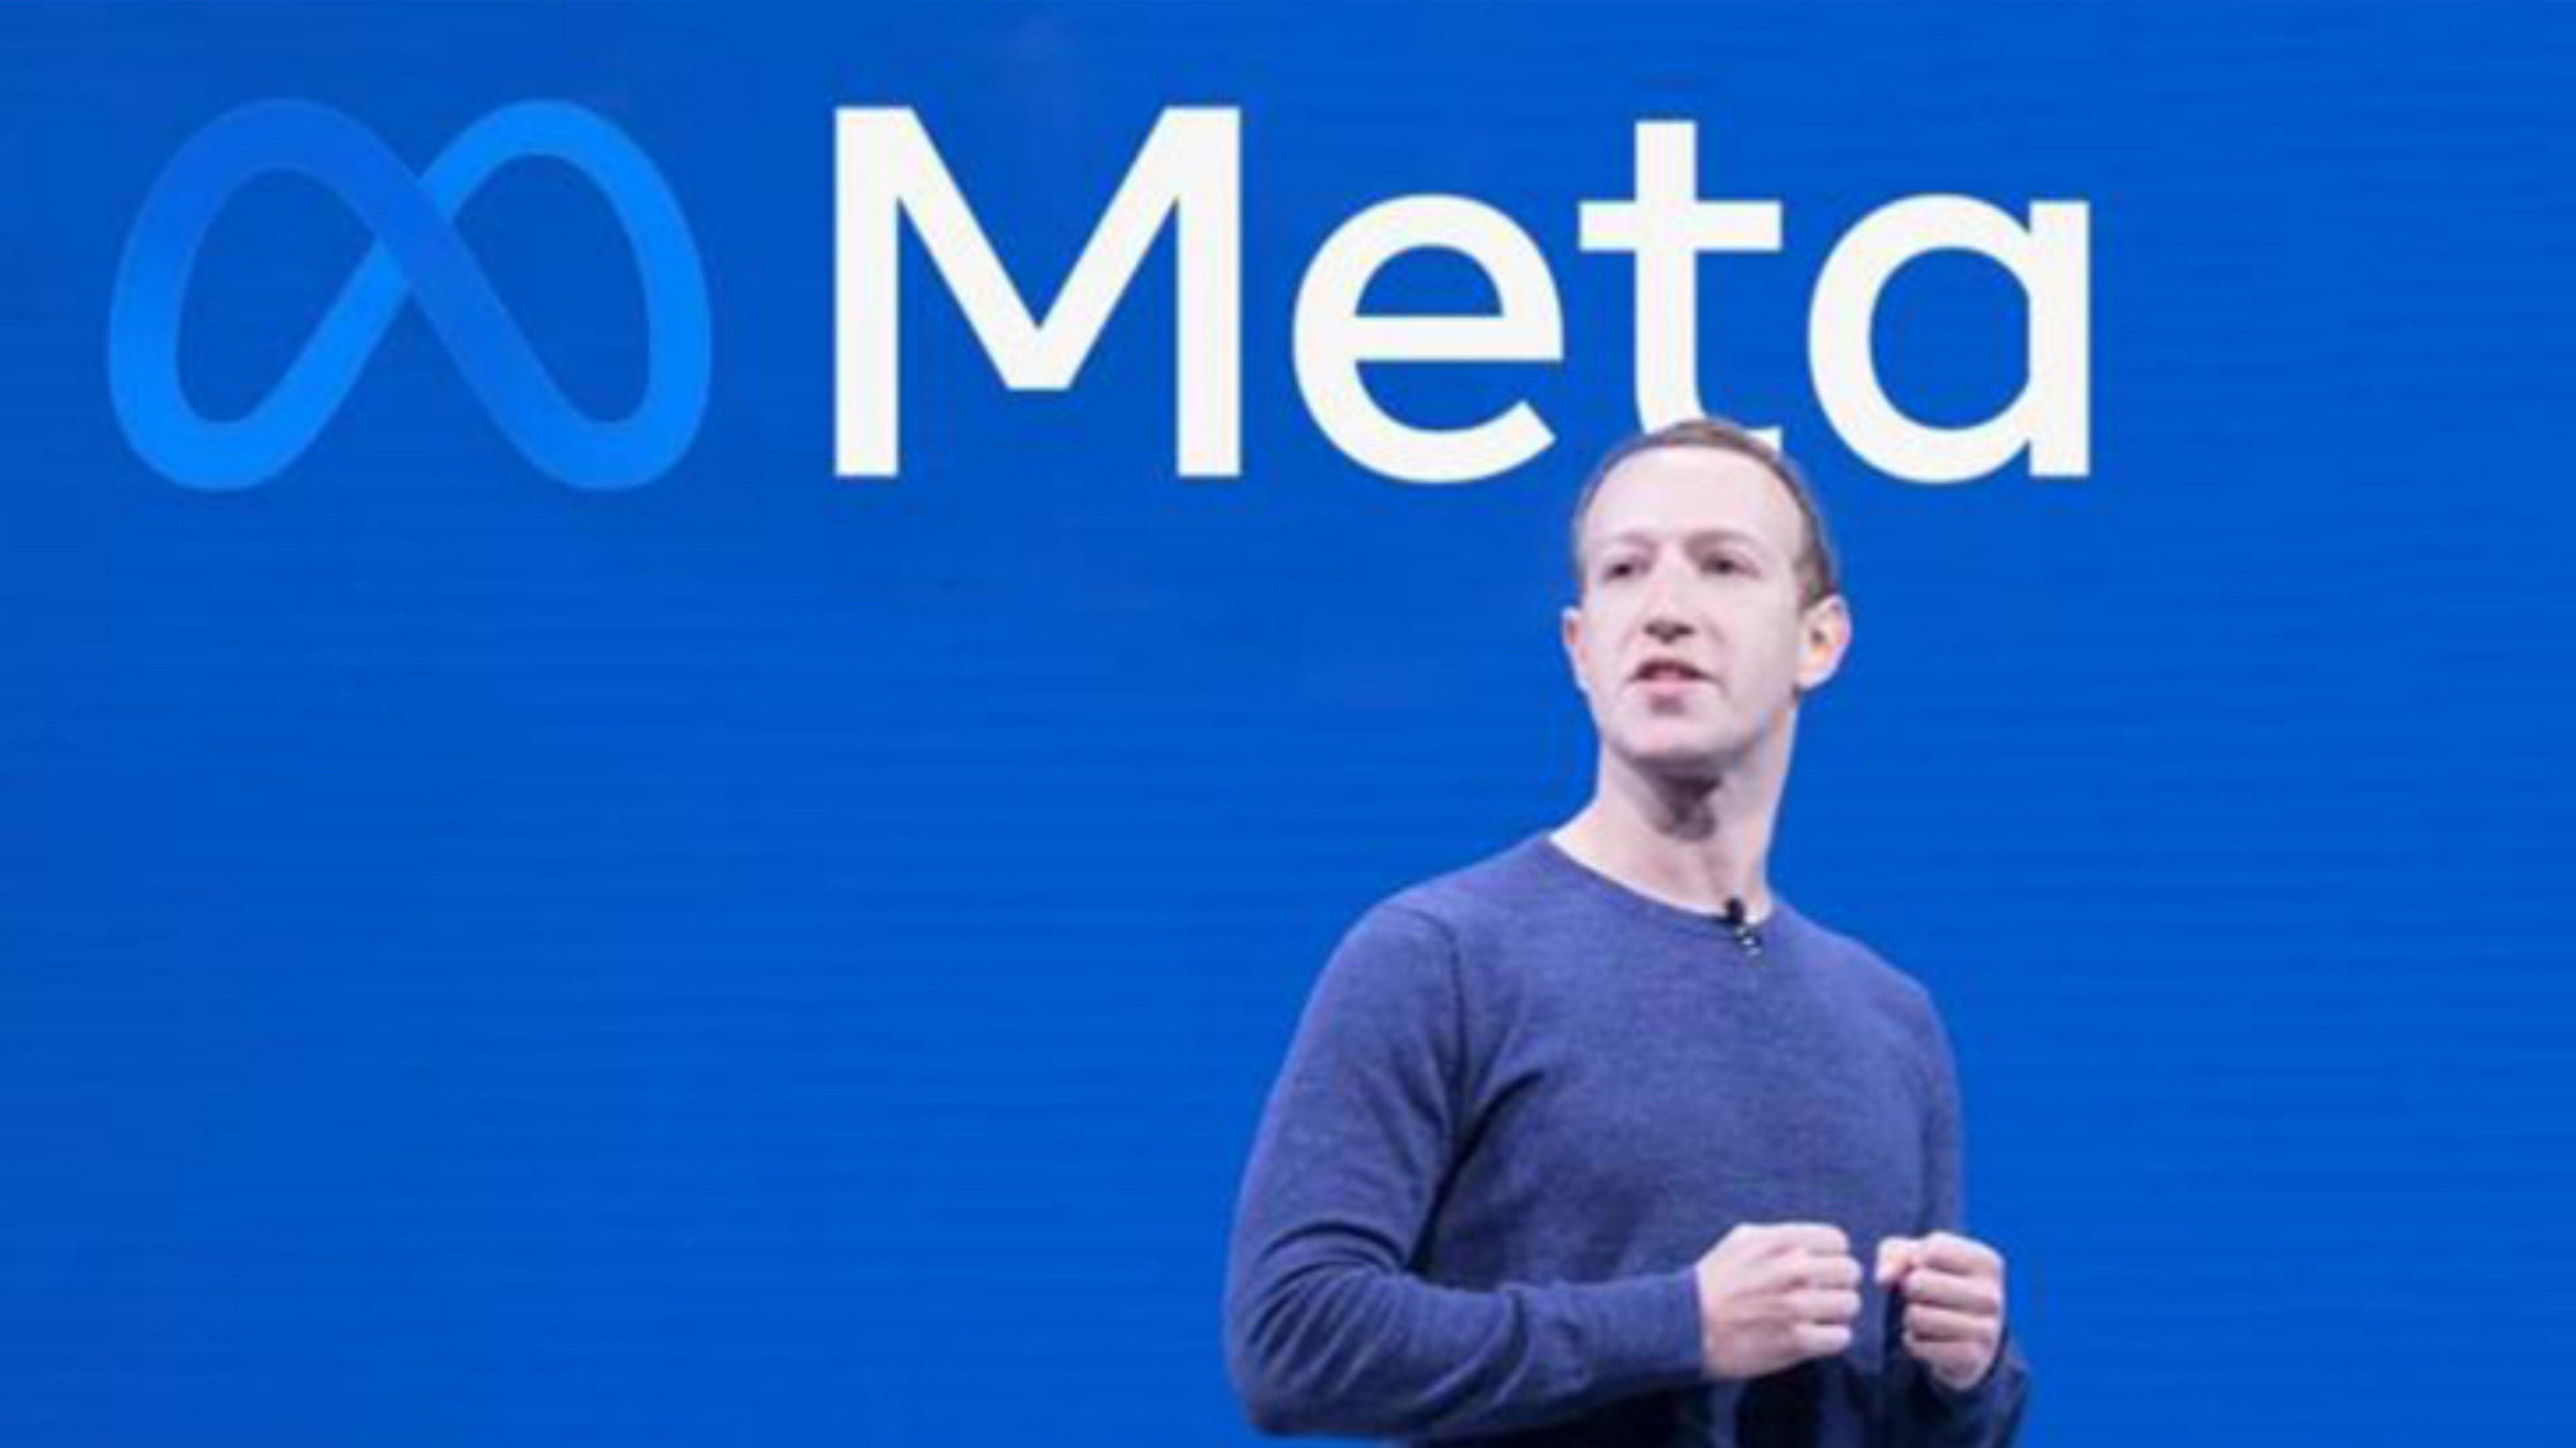 Meta CEO Mark Zuckerberg's Annual Salary is Only 1 Dollar